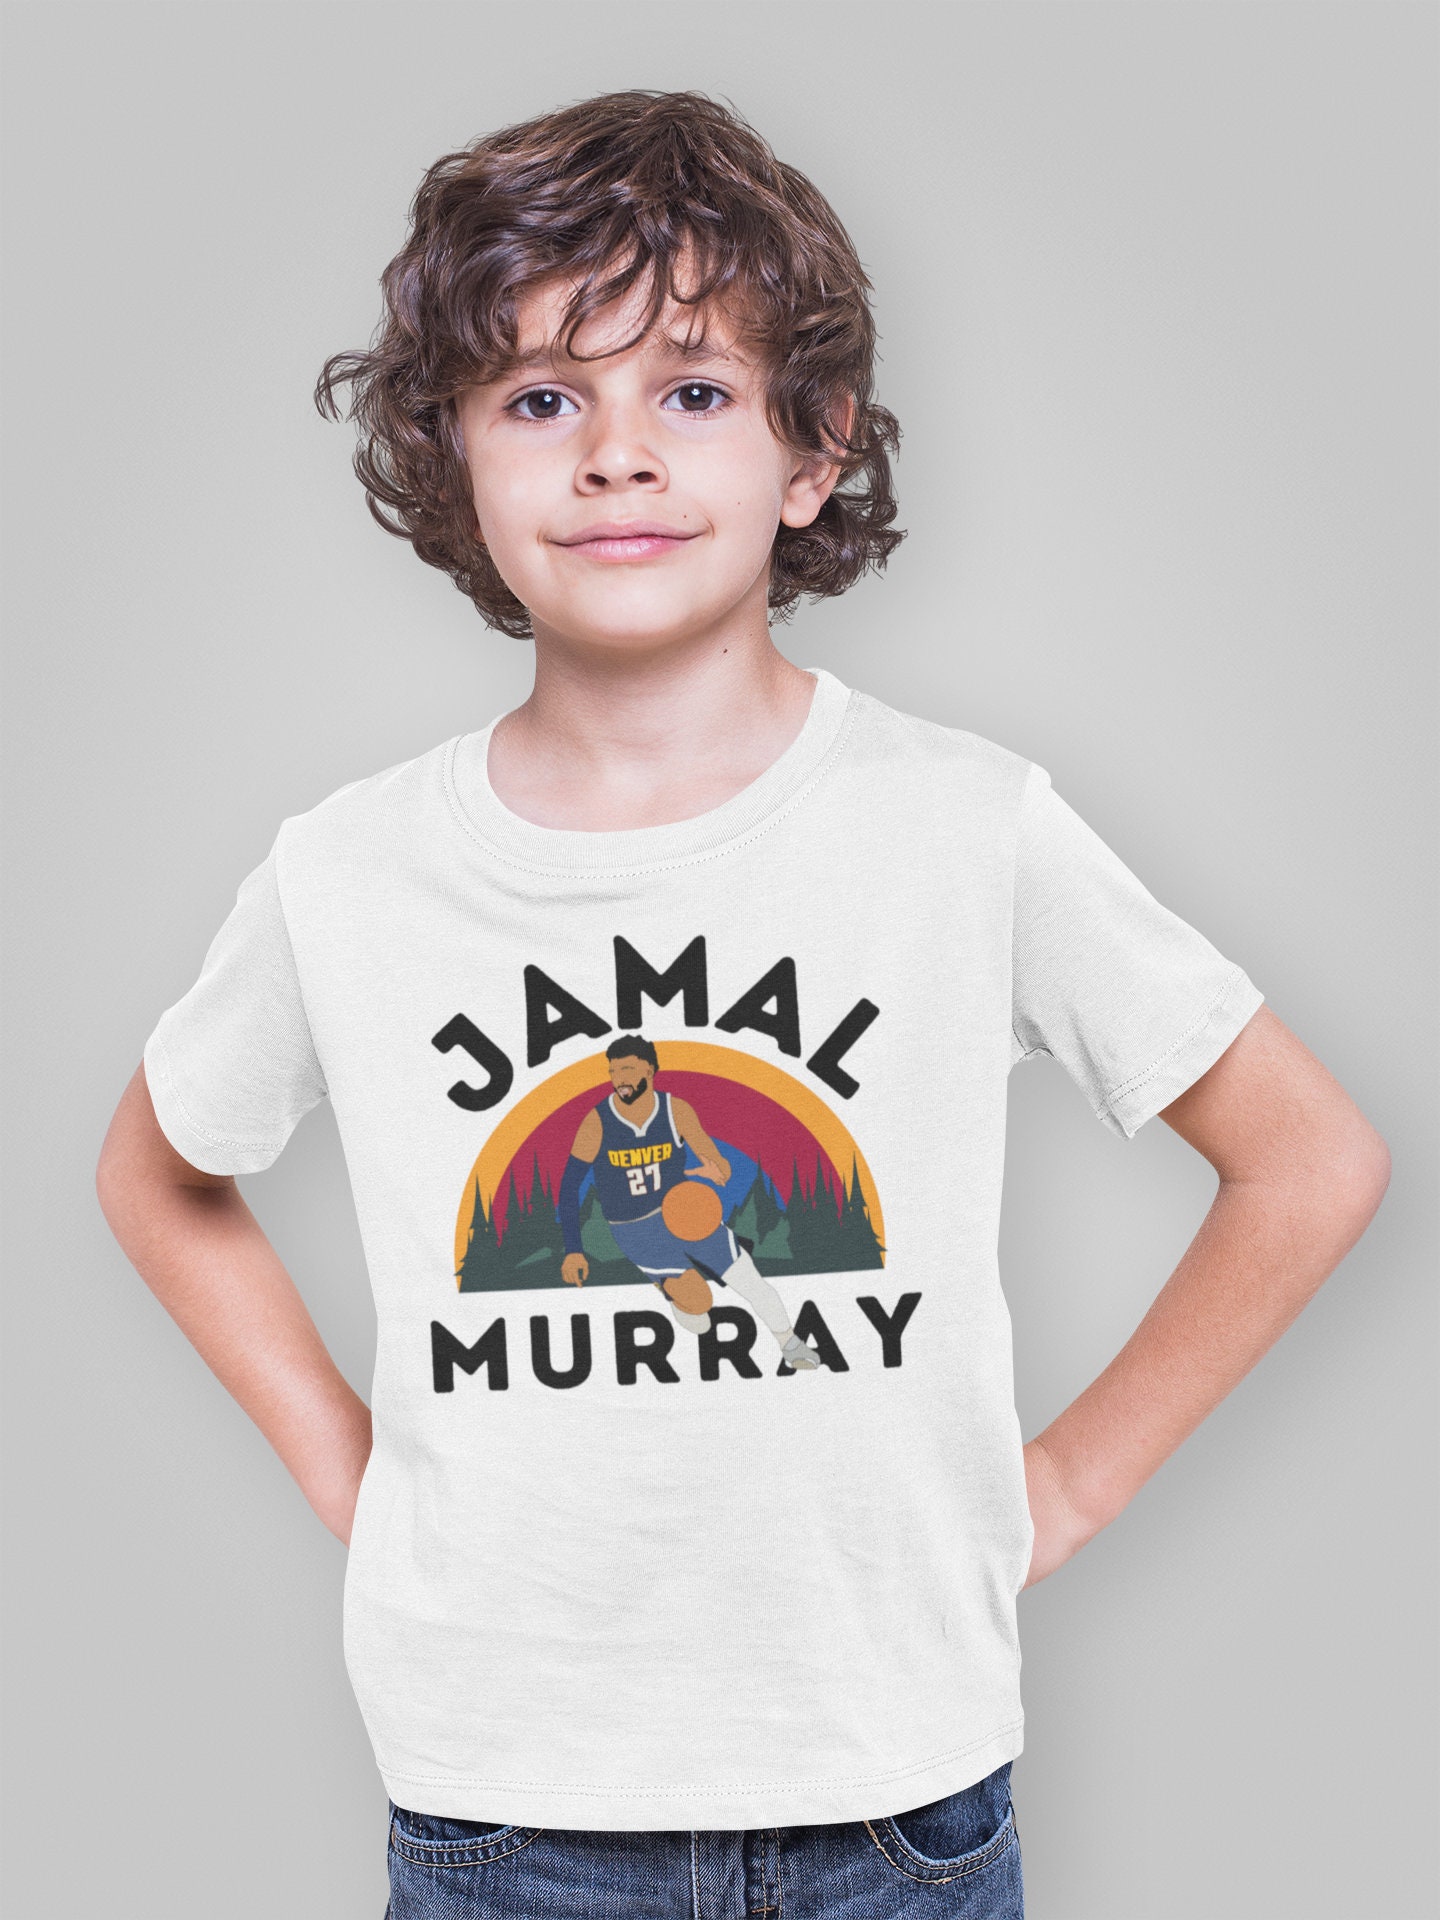 Jamal Murray NBA retro graphic t-shirt by To-Tee Clothing - Issuu